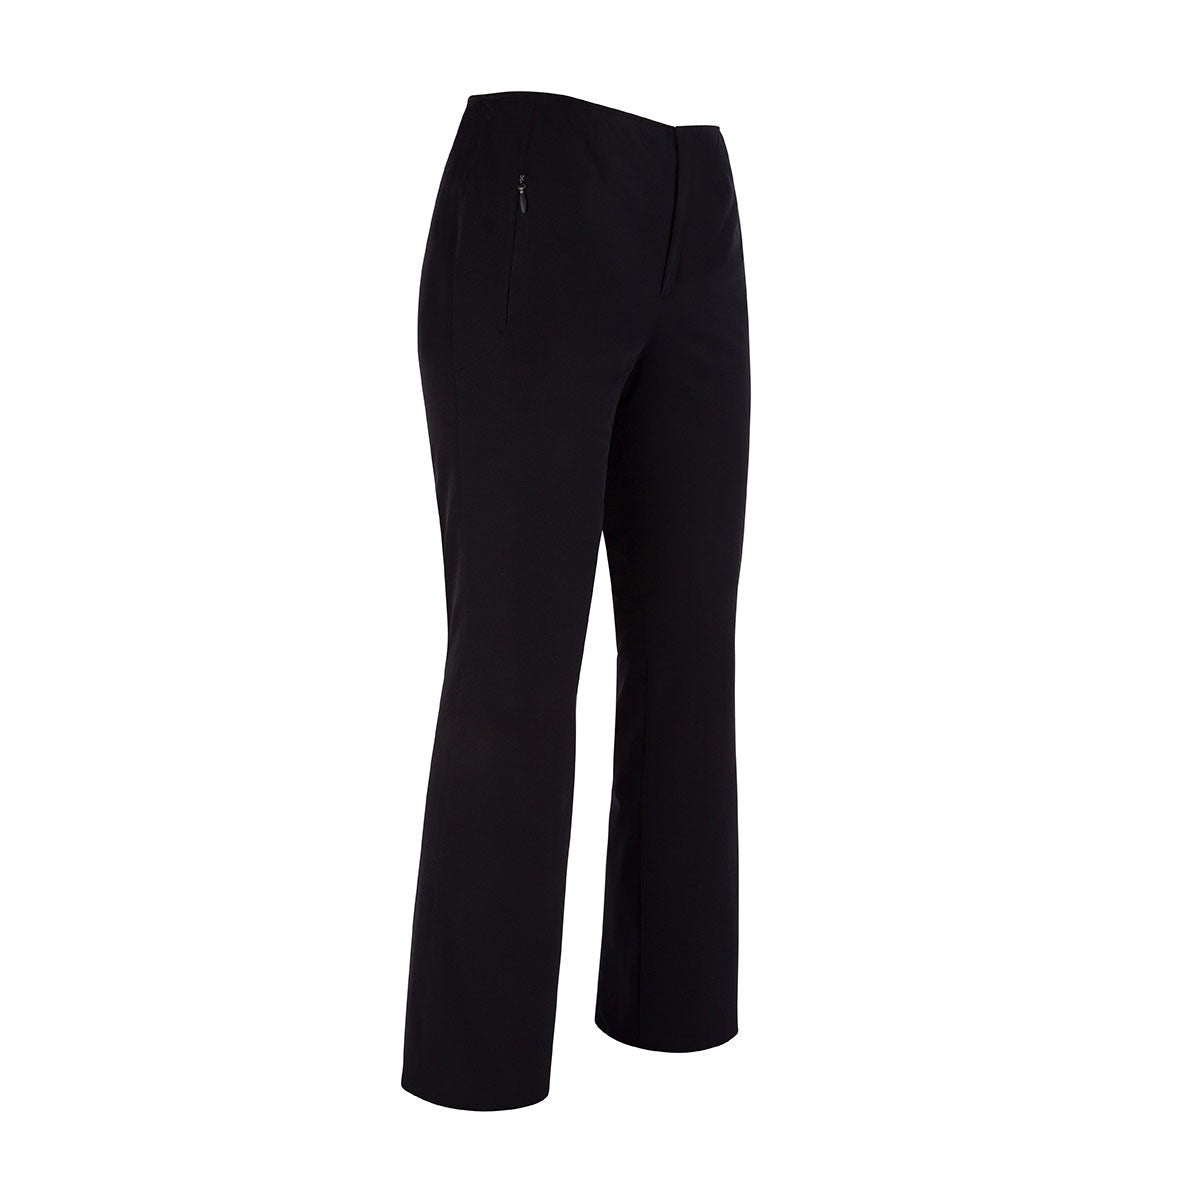 Buy Cartel Canada Women's Plus Size Ski Pants Black Sizes 18-30 Online